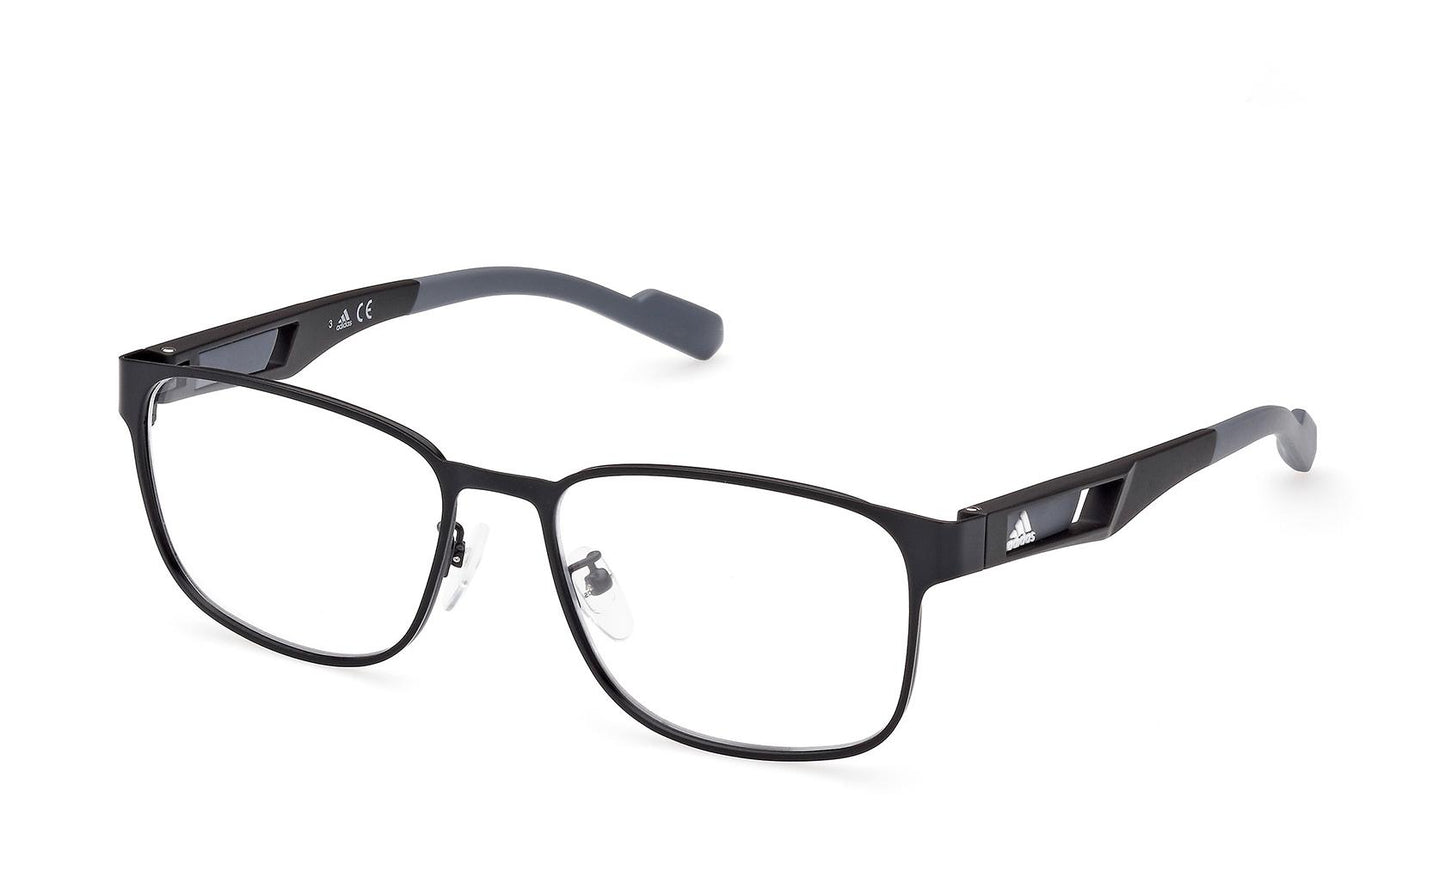 Adidas Sport Eyeglasses SP5035 002